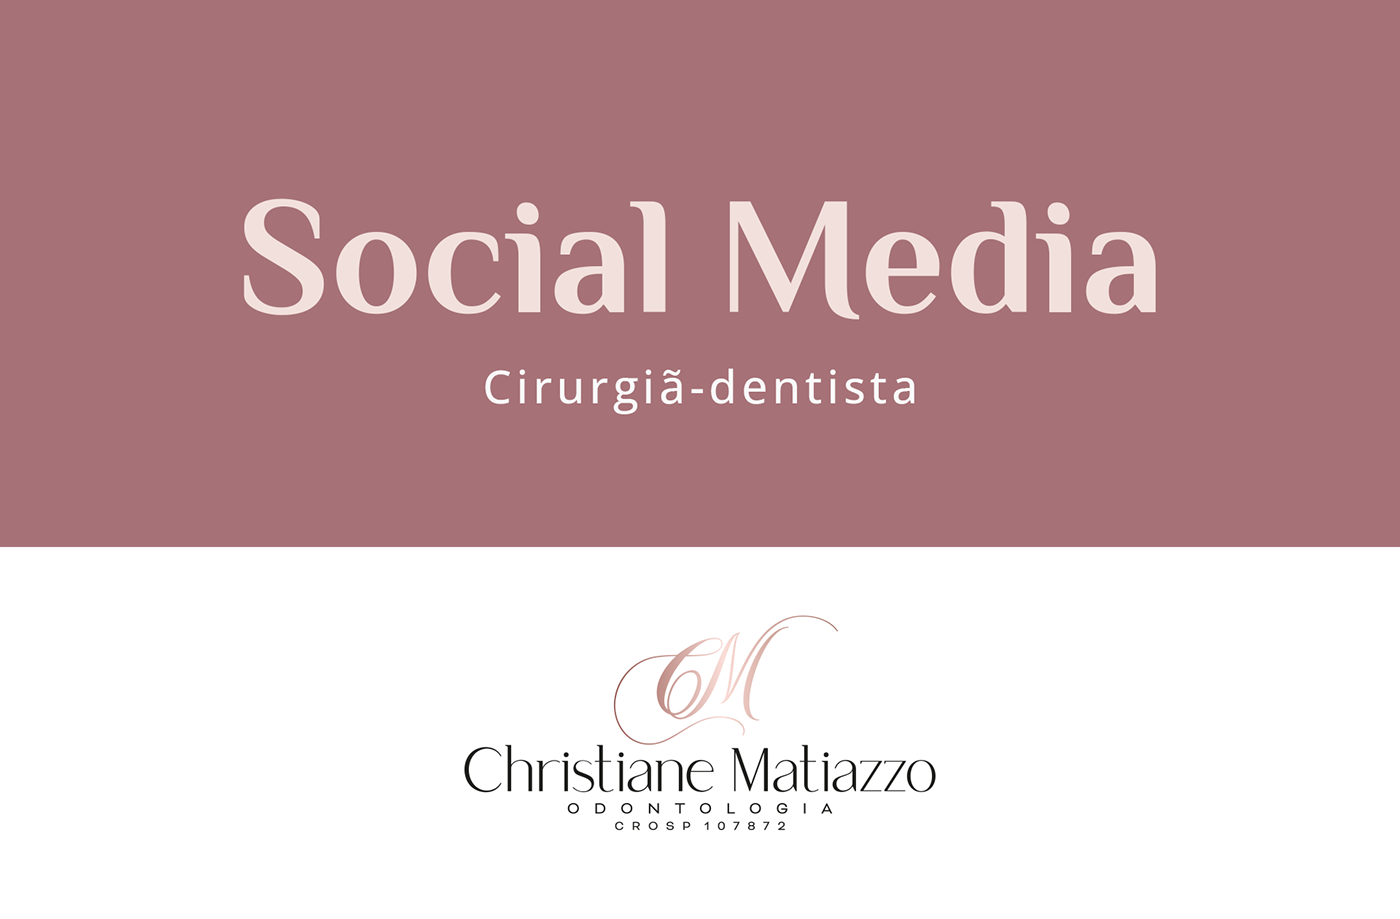 botox cirurgia dentista Clareamento Dental Clínica Odontológica dentista endodontia Odontologia ortodontia social media Tratamento dentário